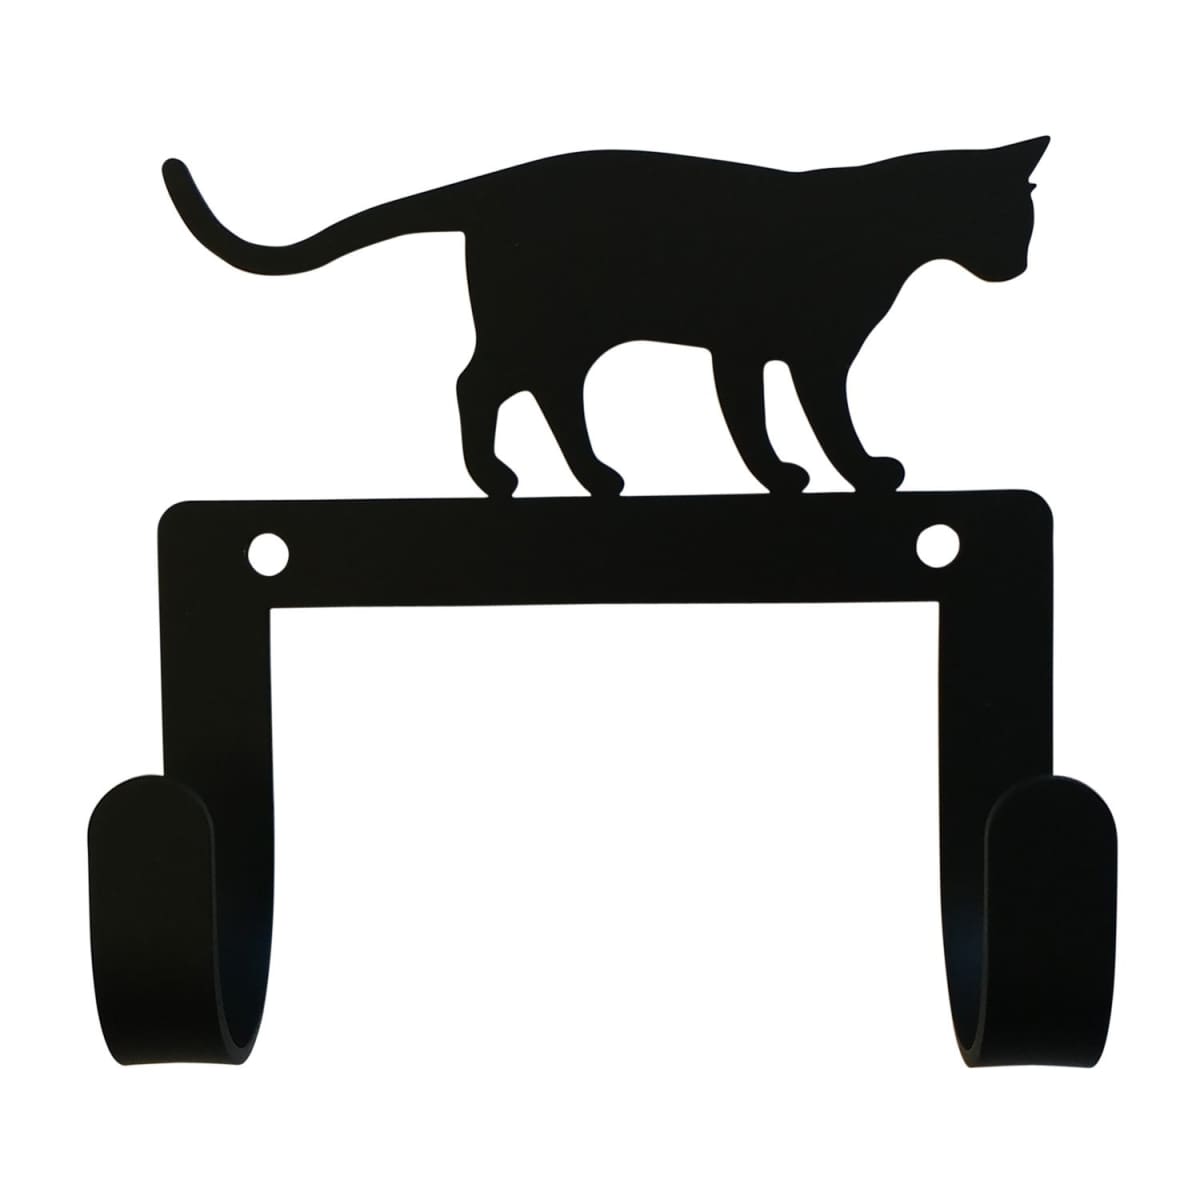 Cat Products - Cat Hooks - Cat Decorations